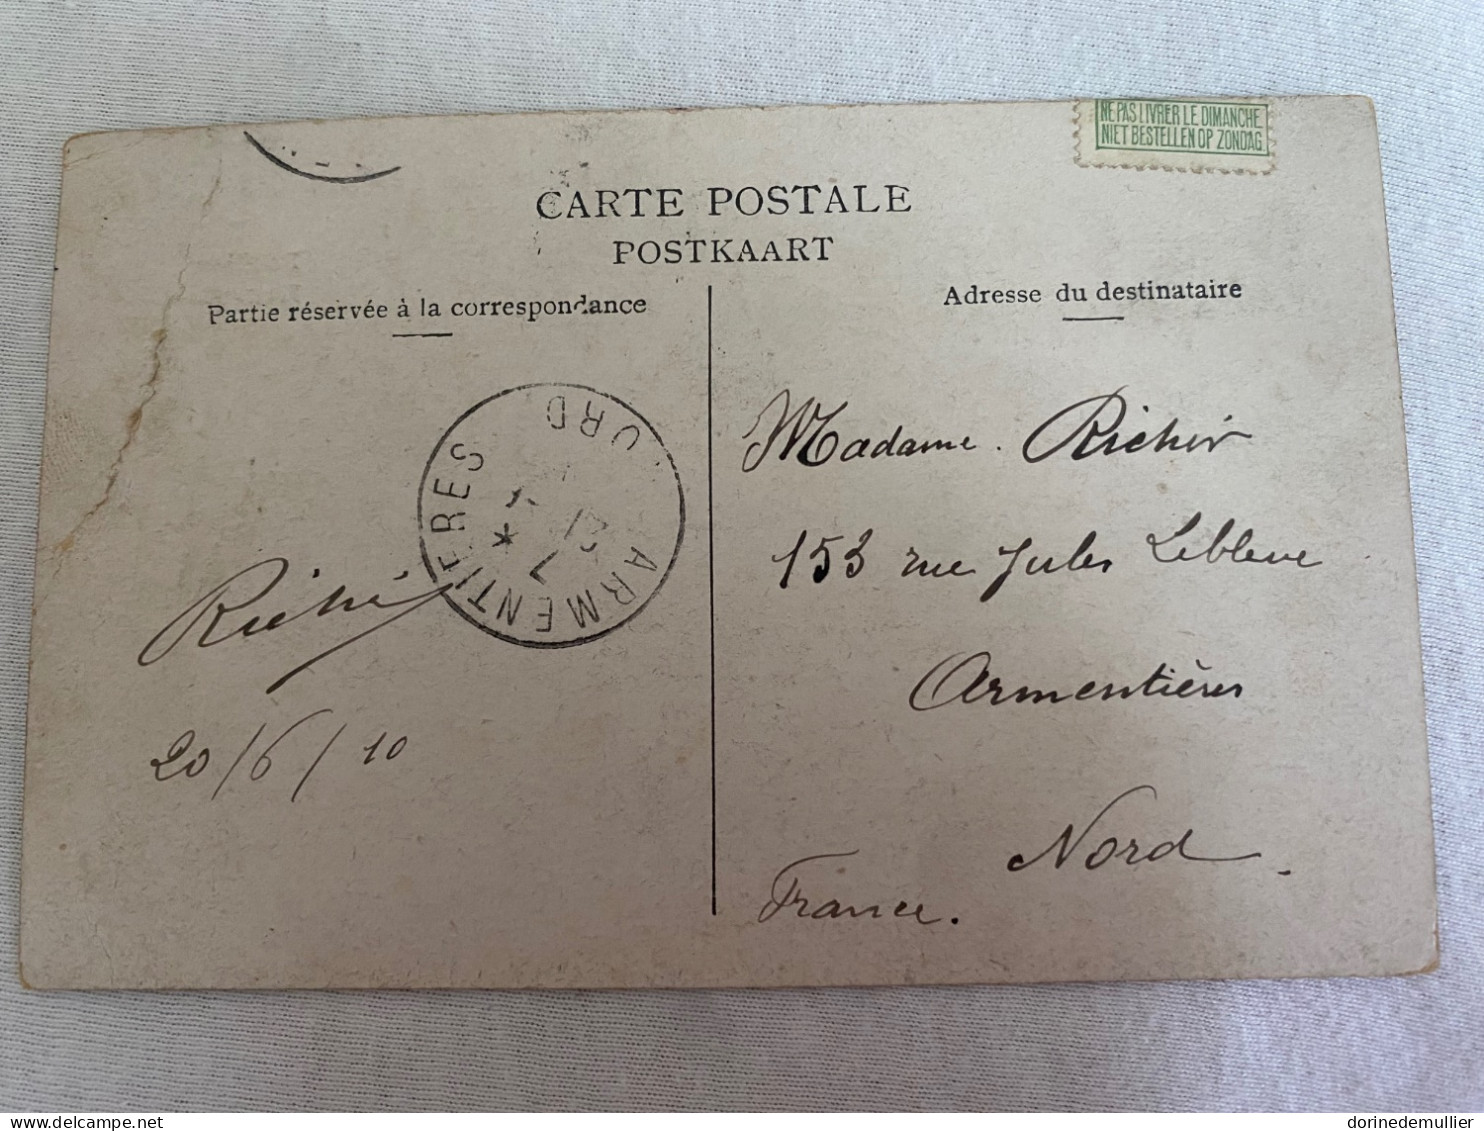 Cartes postales anciennes Belgiques